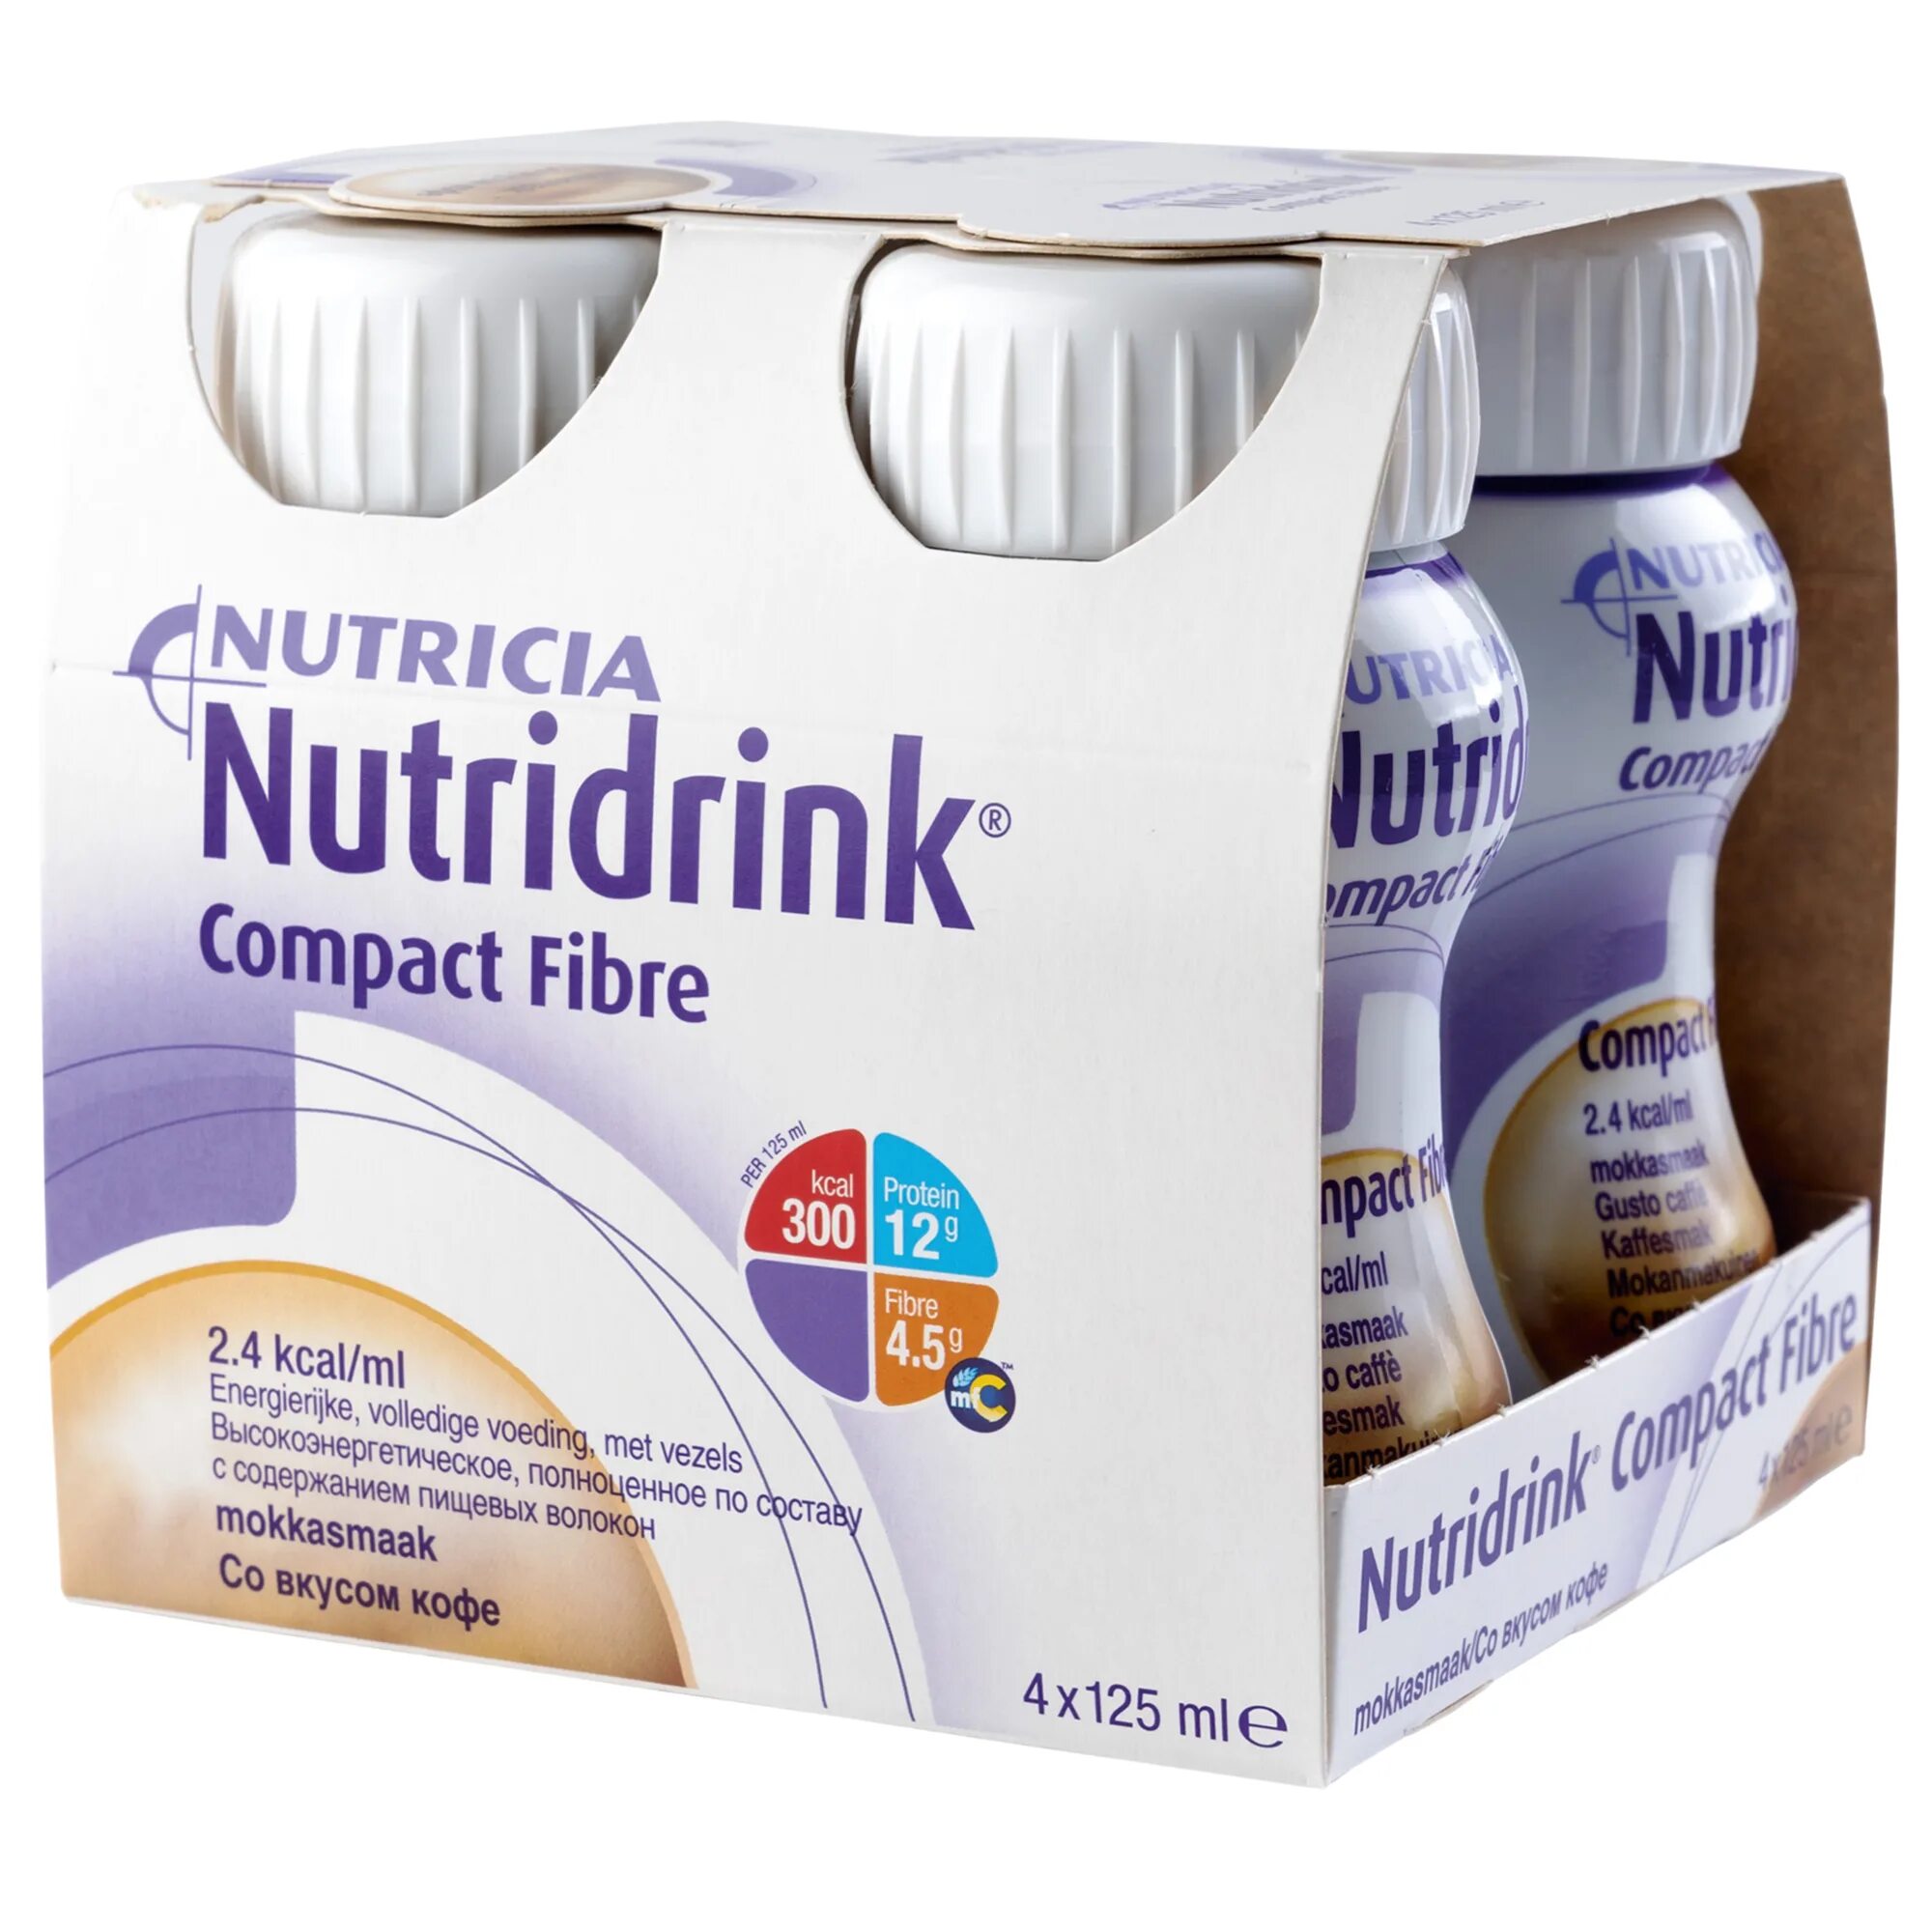 Nutridrink compact protein отзывы. Лечебное питание Нутриция Нутридринк. Нутридринк компакт" с пищевыми волокнами со вкусом кофе, 125 мл. Нутридринк компакт Файбер. Нутридринк компакт 200 мл.